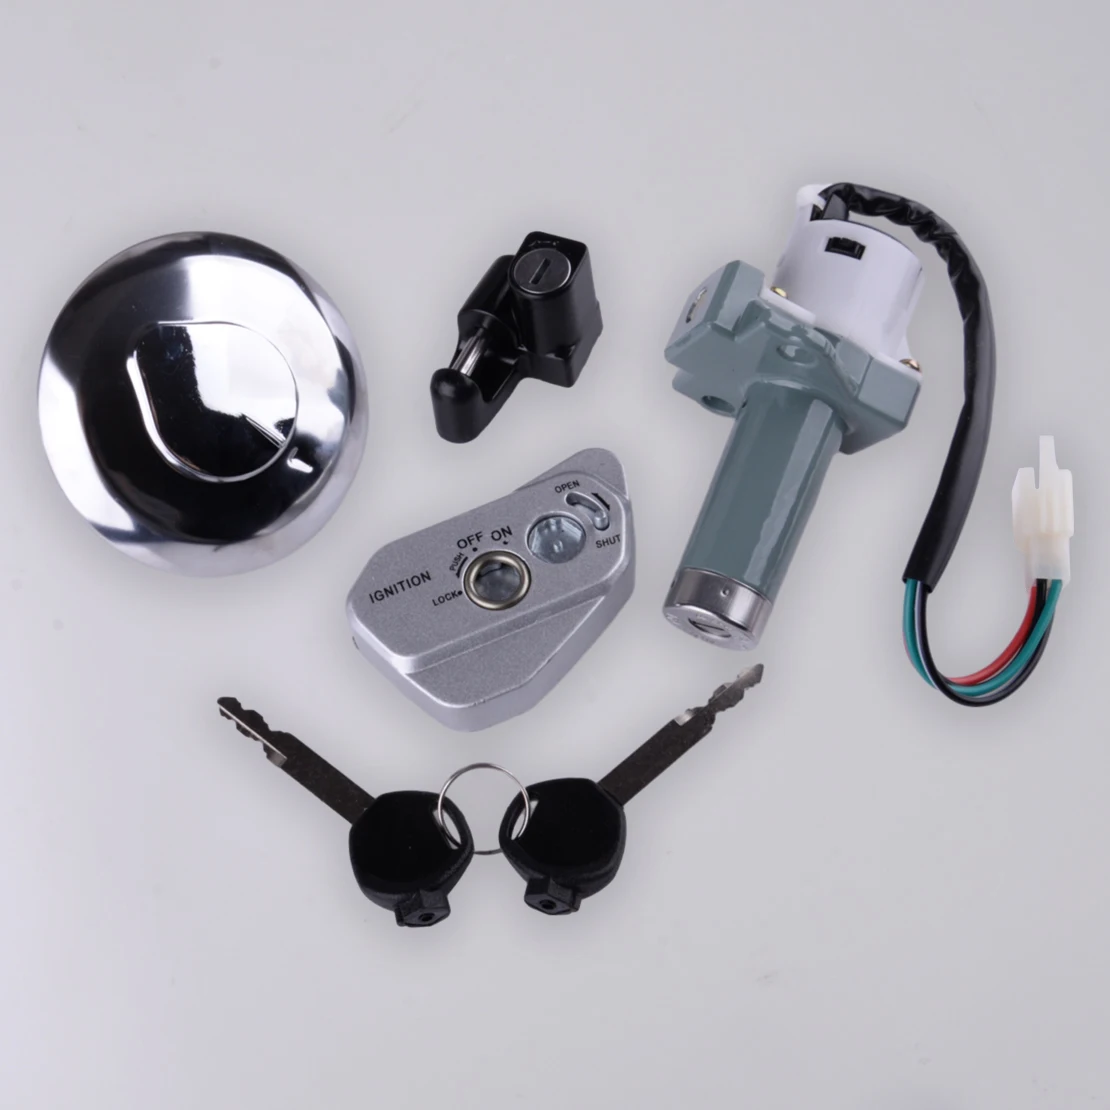 

DWCX Ignition Switch Keys Lock Set Assembly Kit Fit for Hawk 250 Dirt Bikes Pit Bikes 250cc Motorcycle Accessories